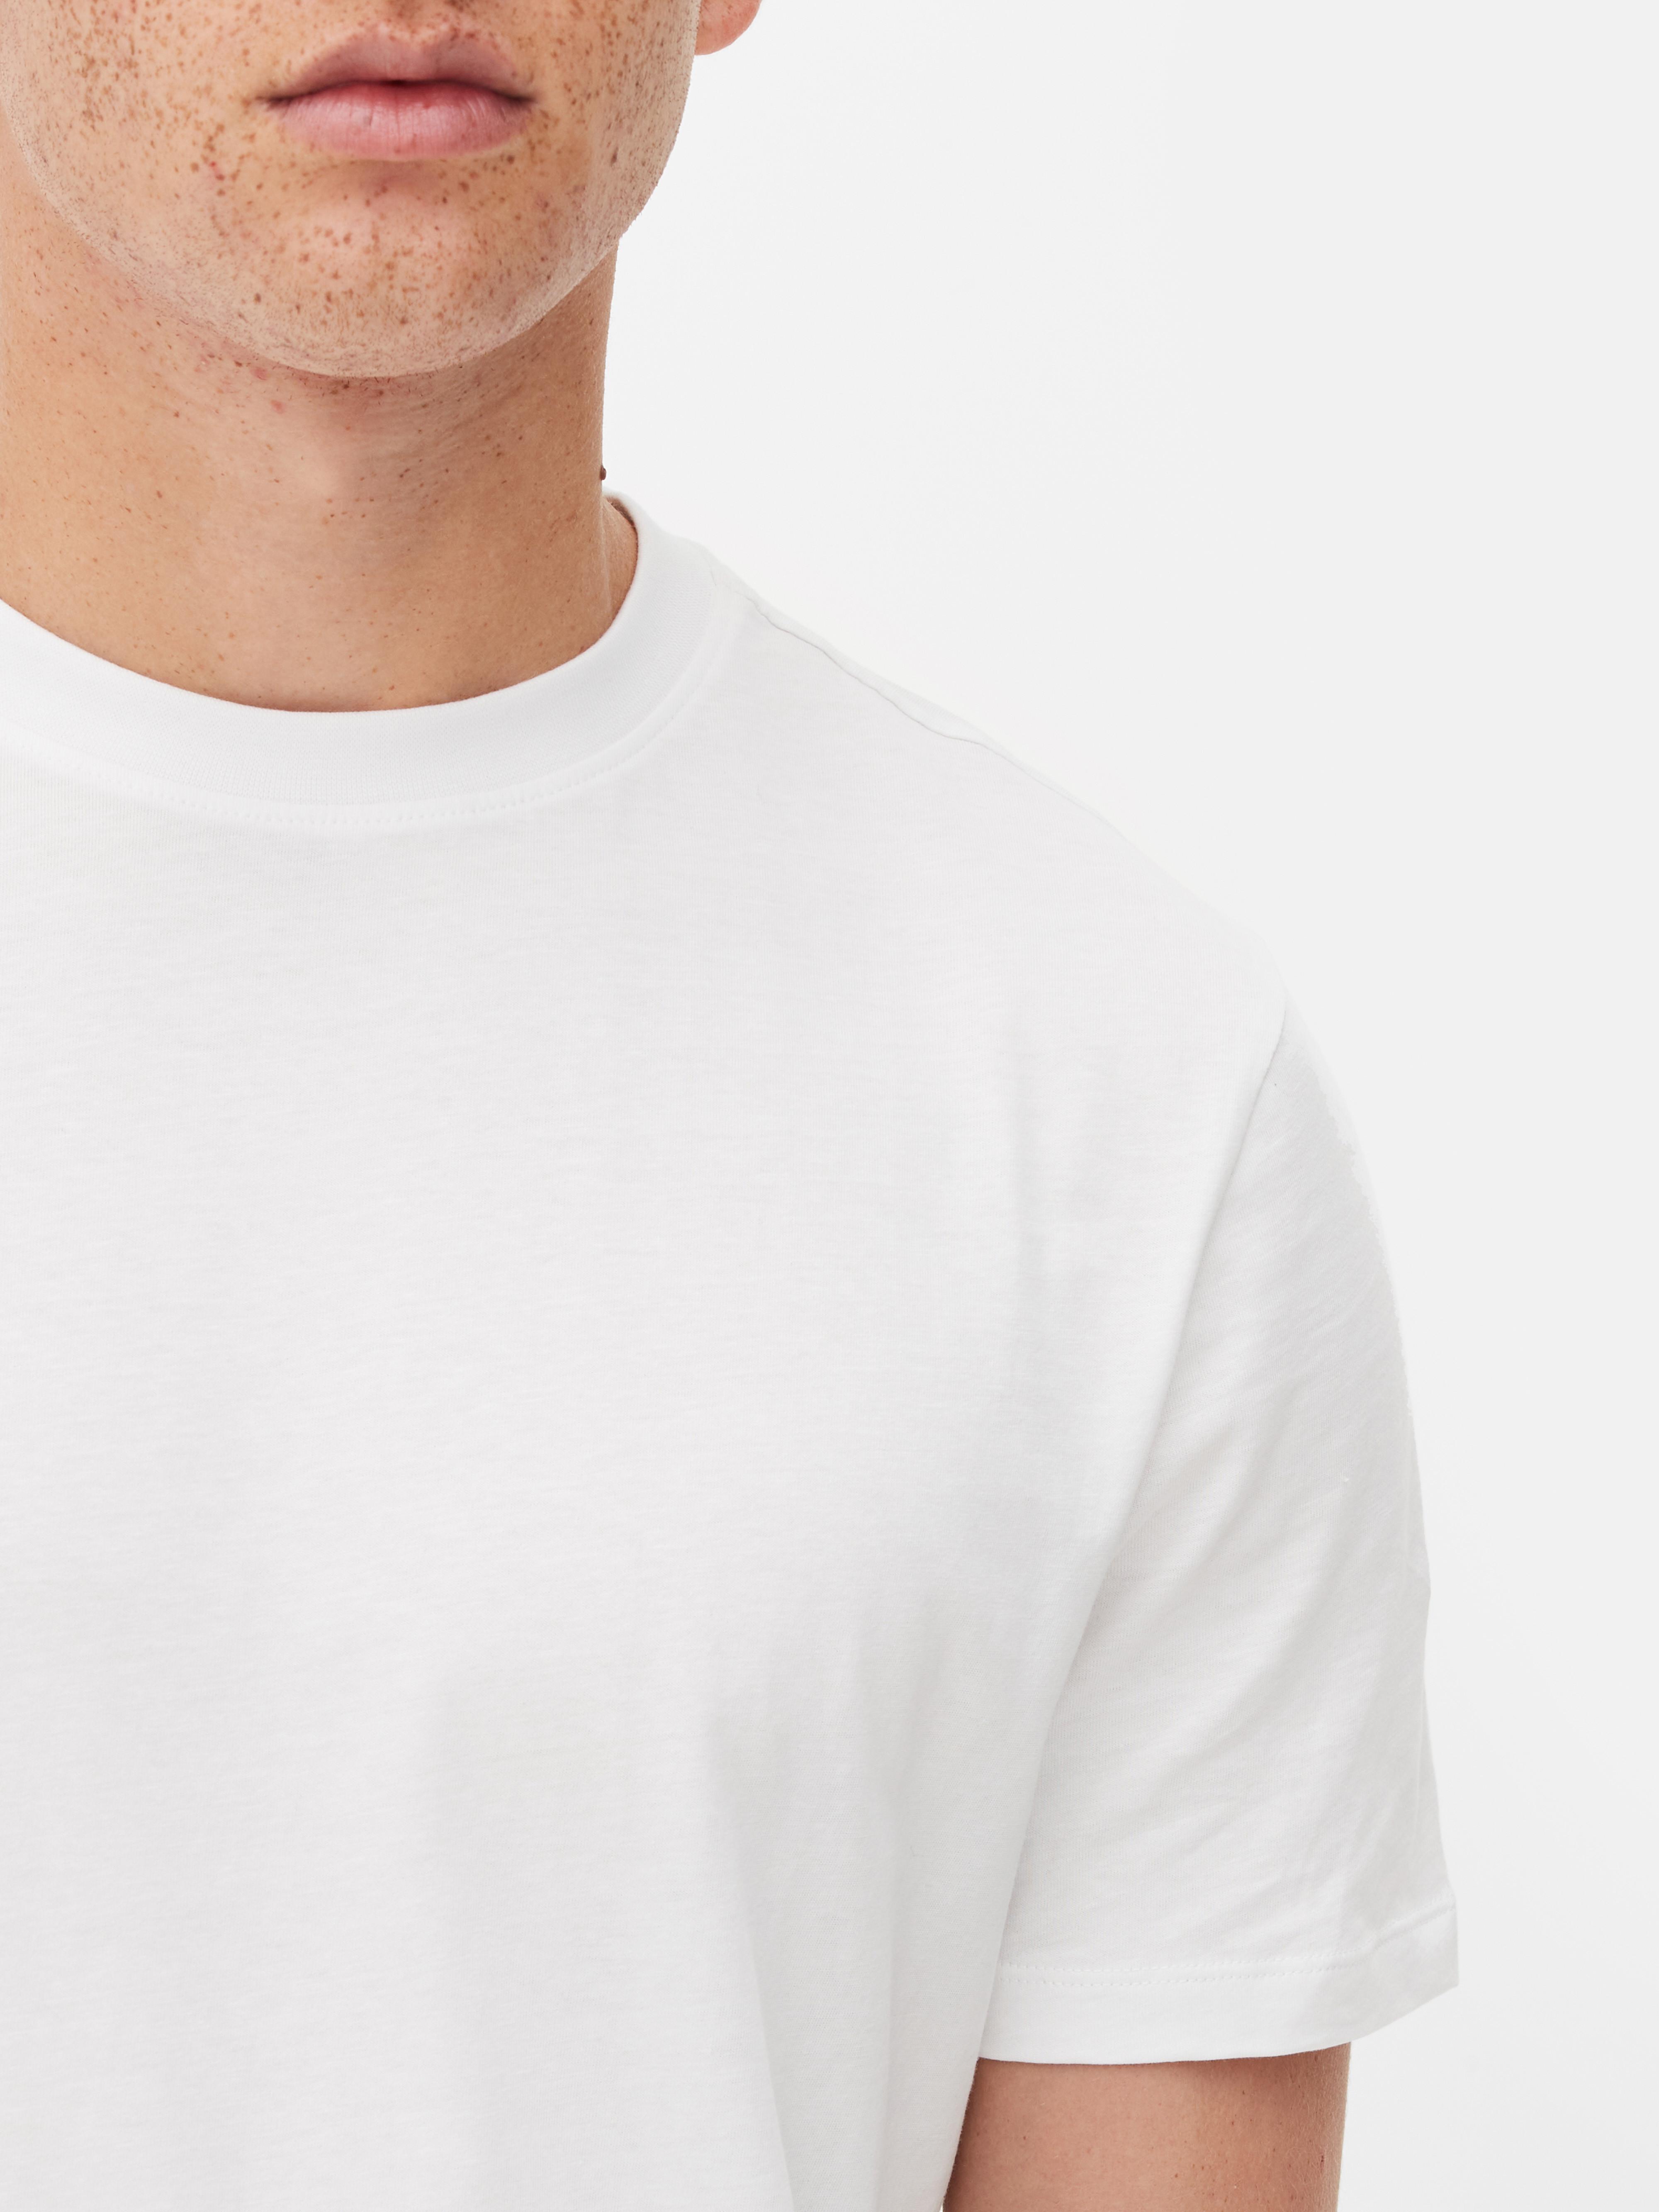 Primark Mens Thermal White T-shirt